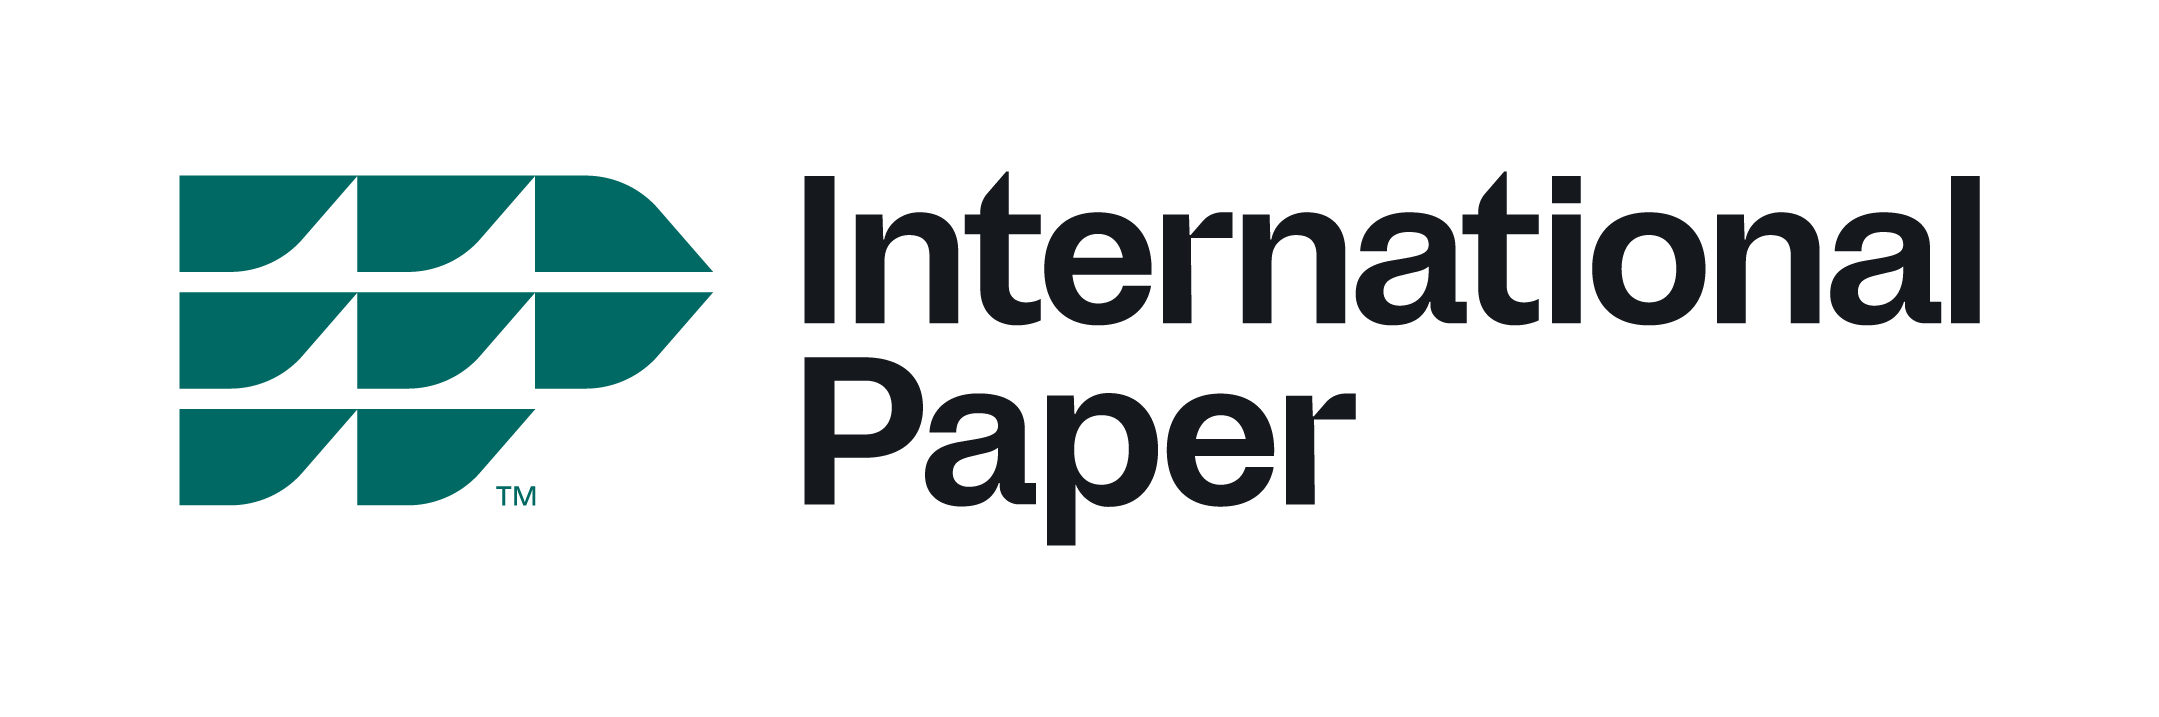     International Paper Company